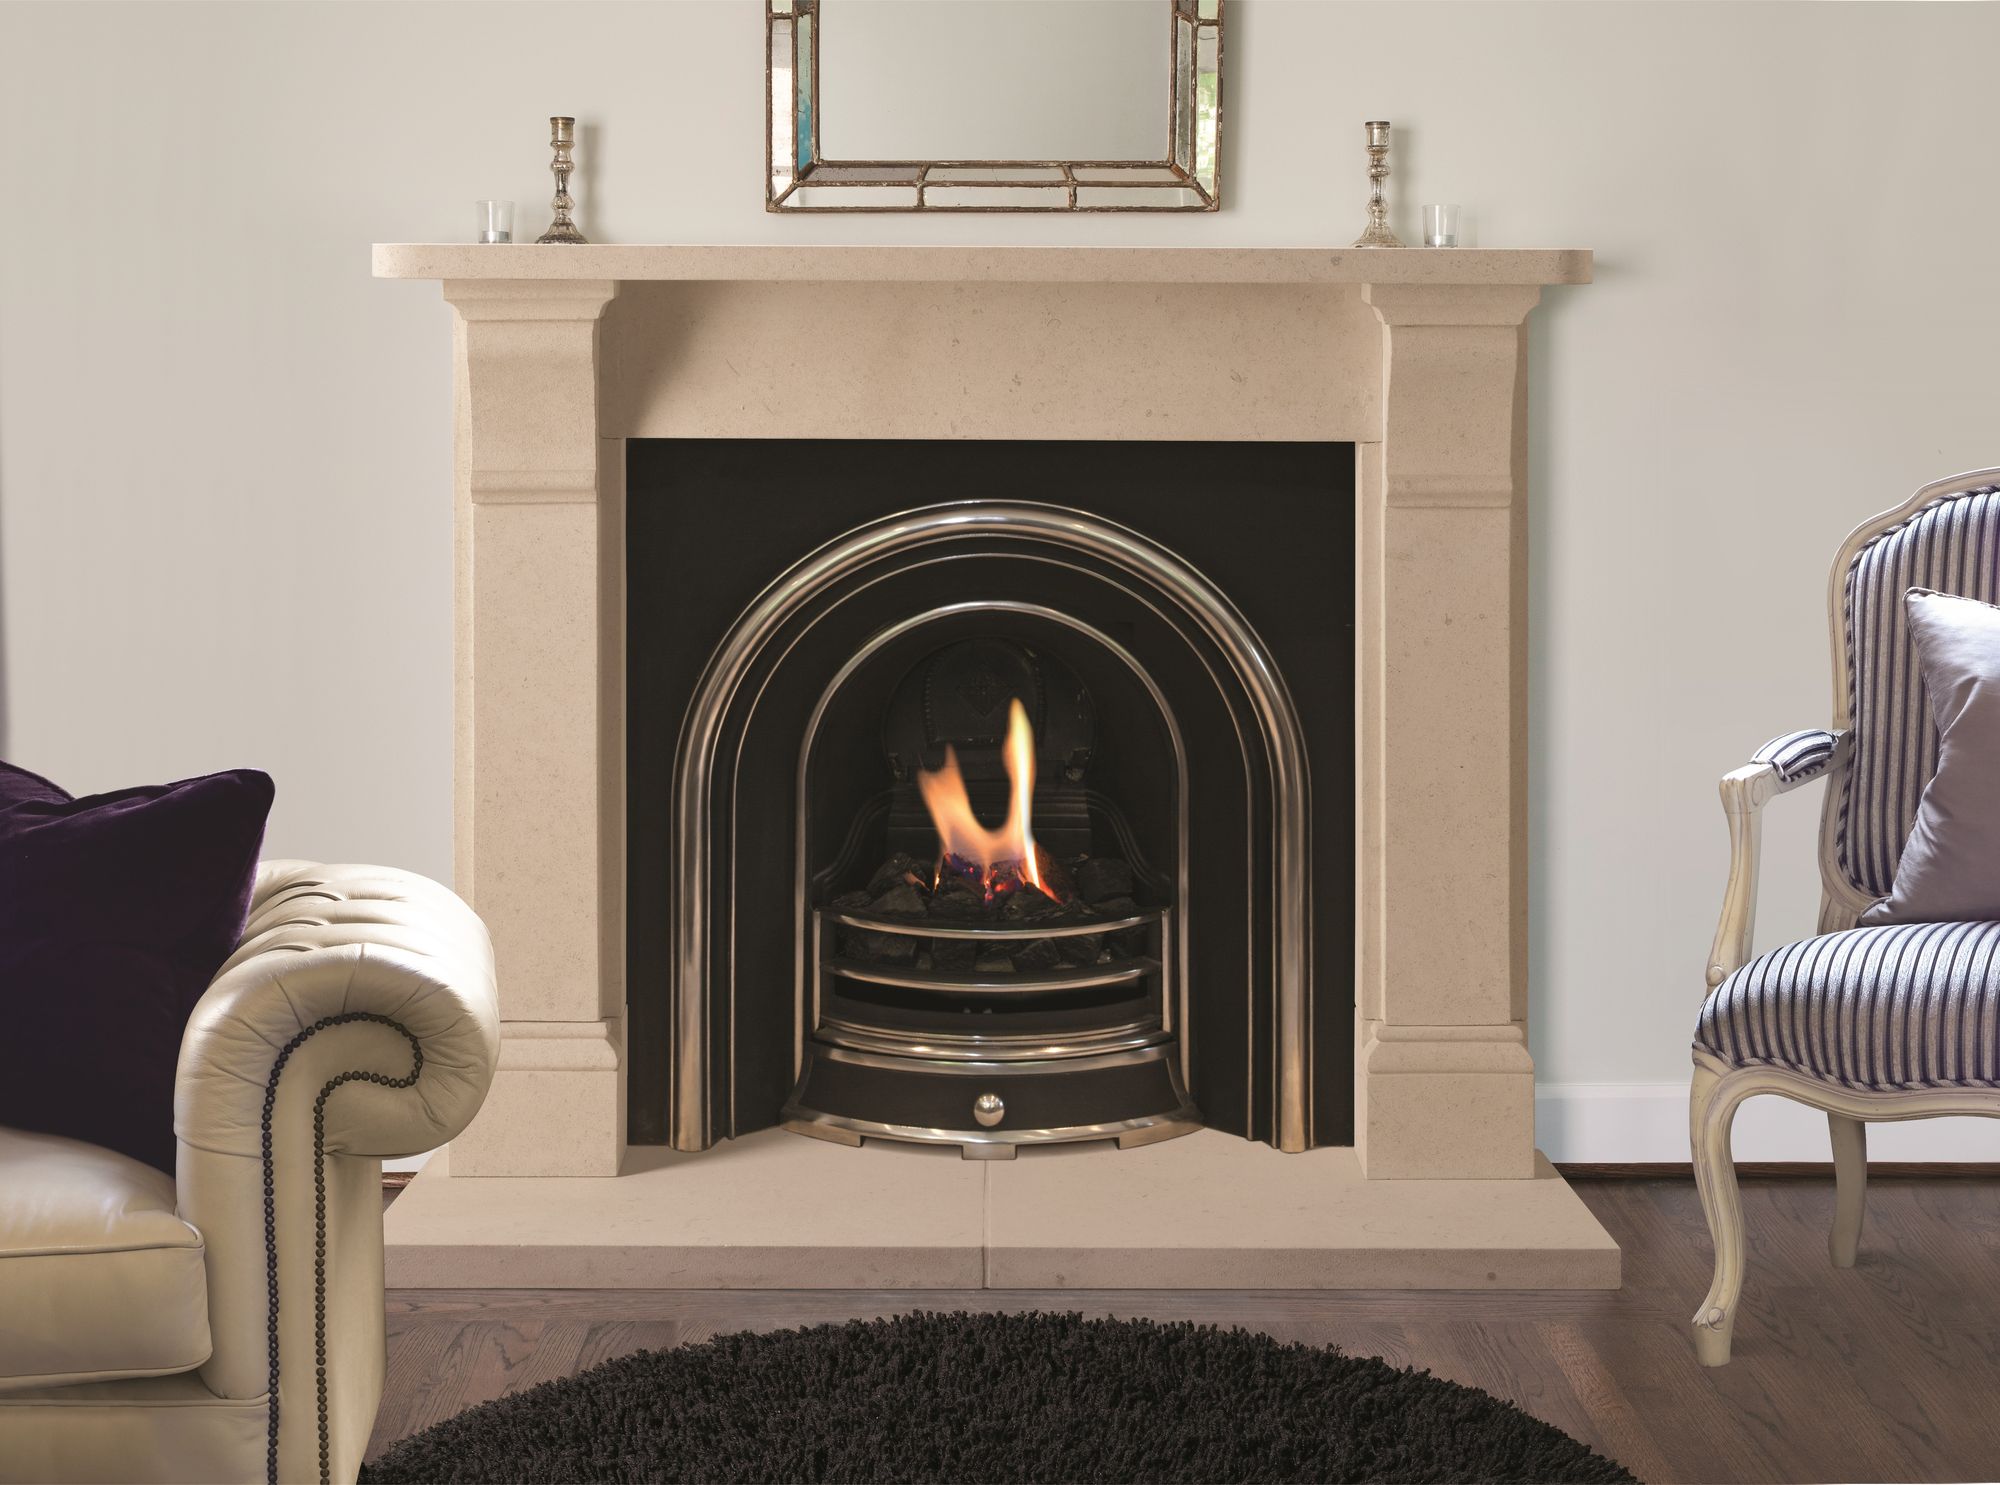 The Edington Bathstone Fireplace